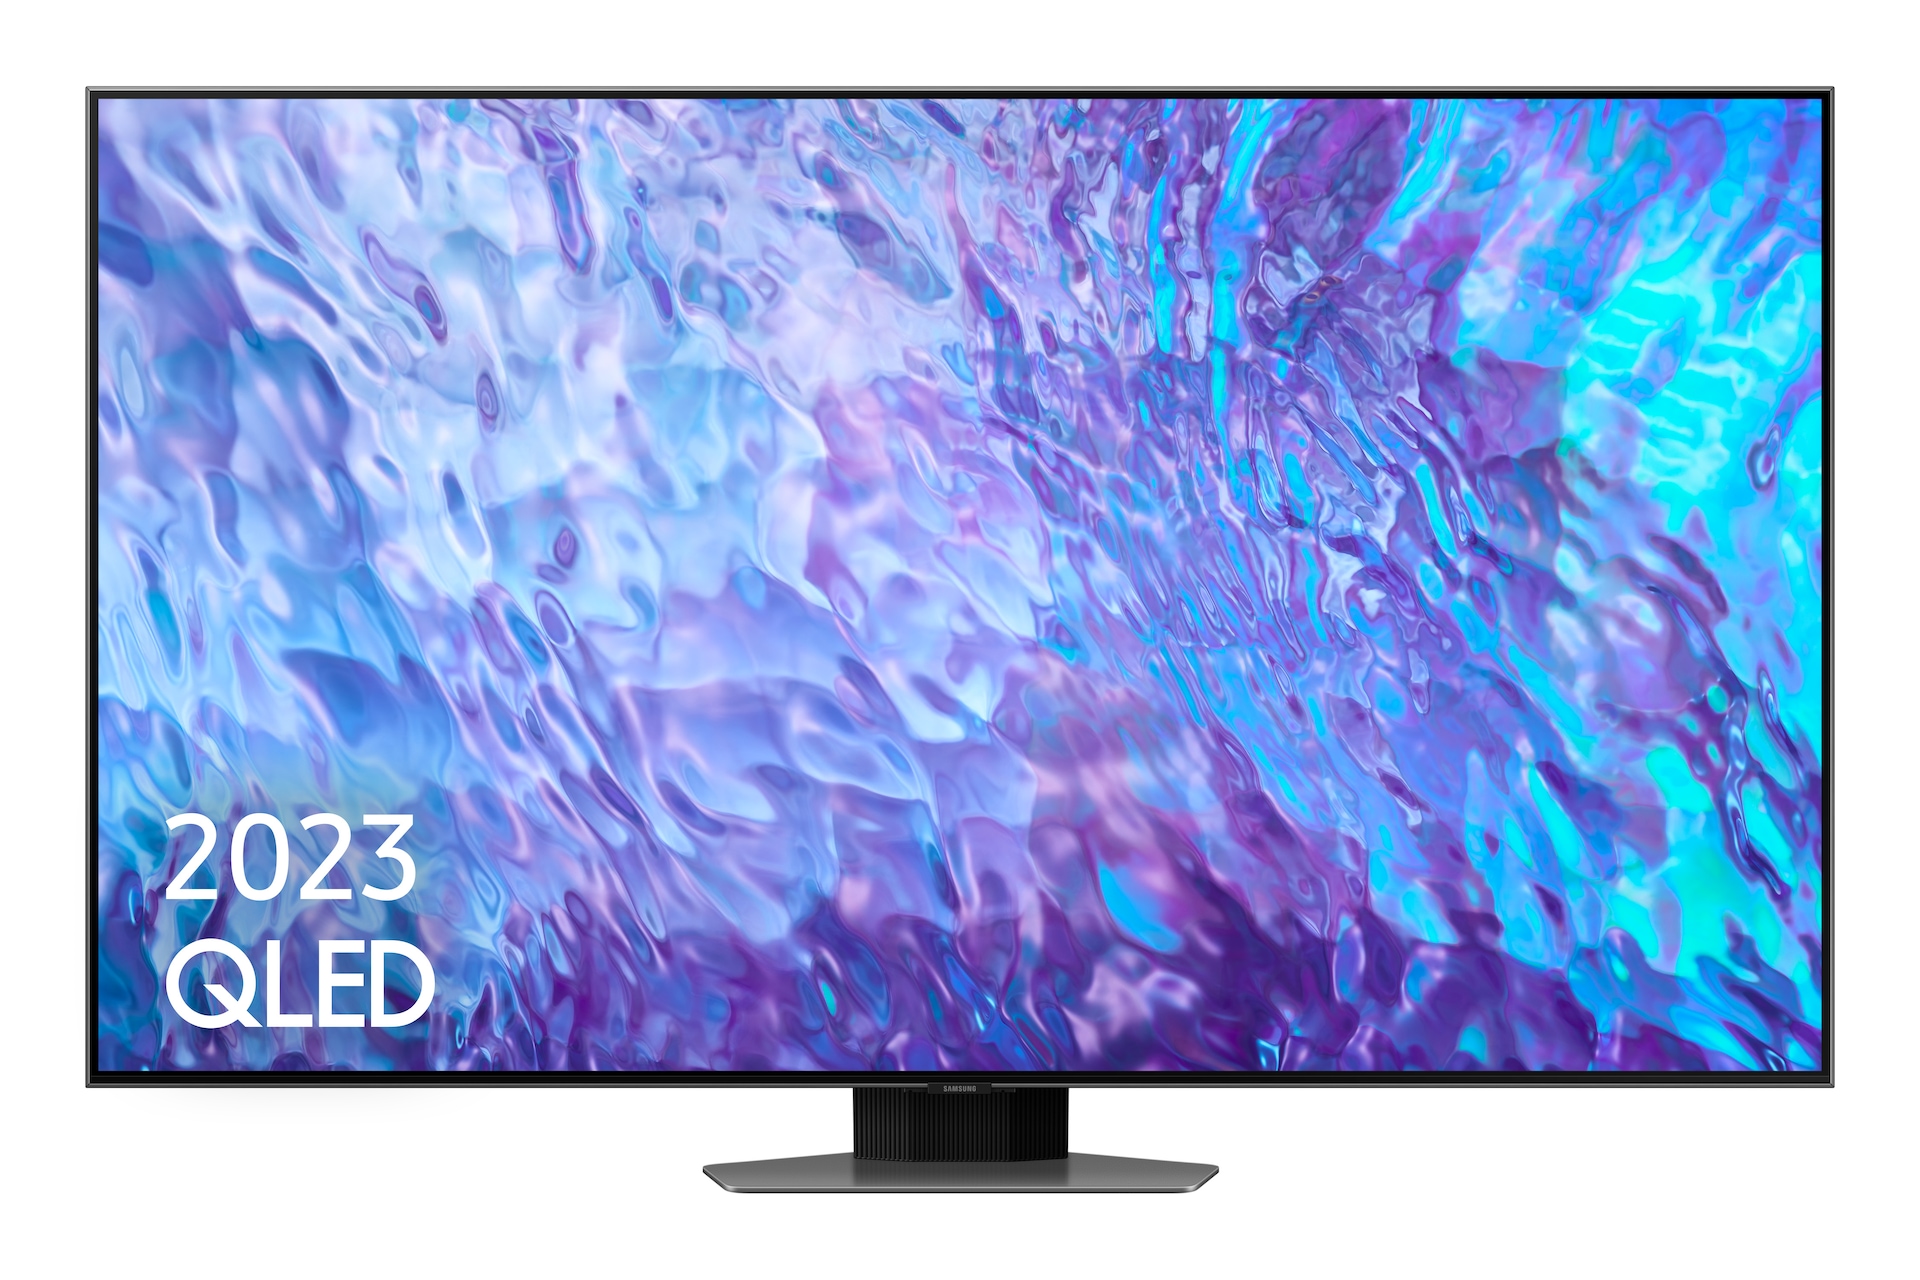 Tv Samsung de 65 pulgadas QLED slin 4K ultra HD curvo smart tv modelo  QN65Q8C Santa Cruz